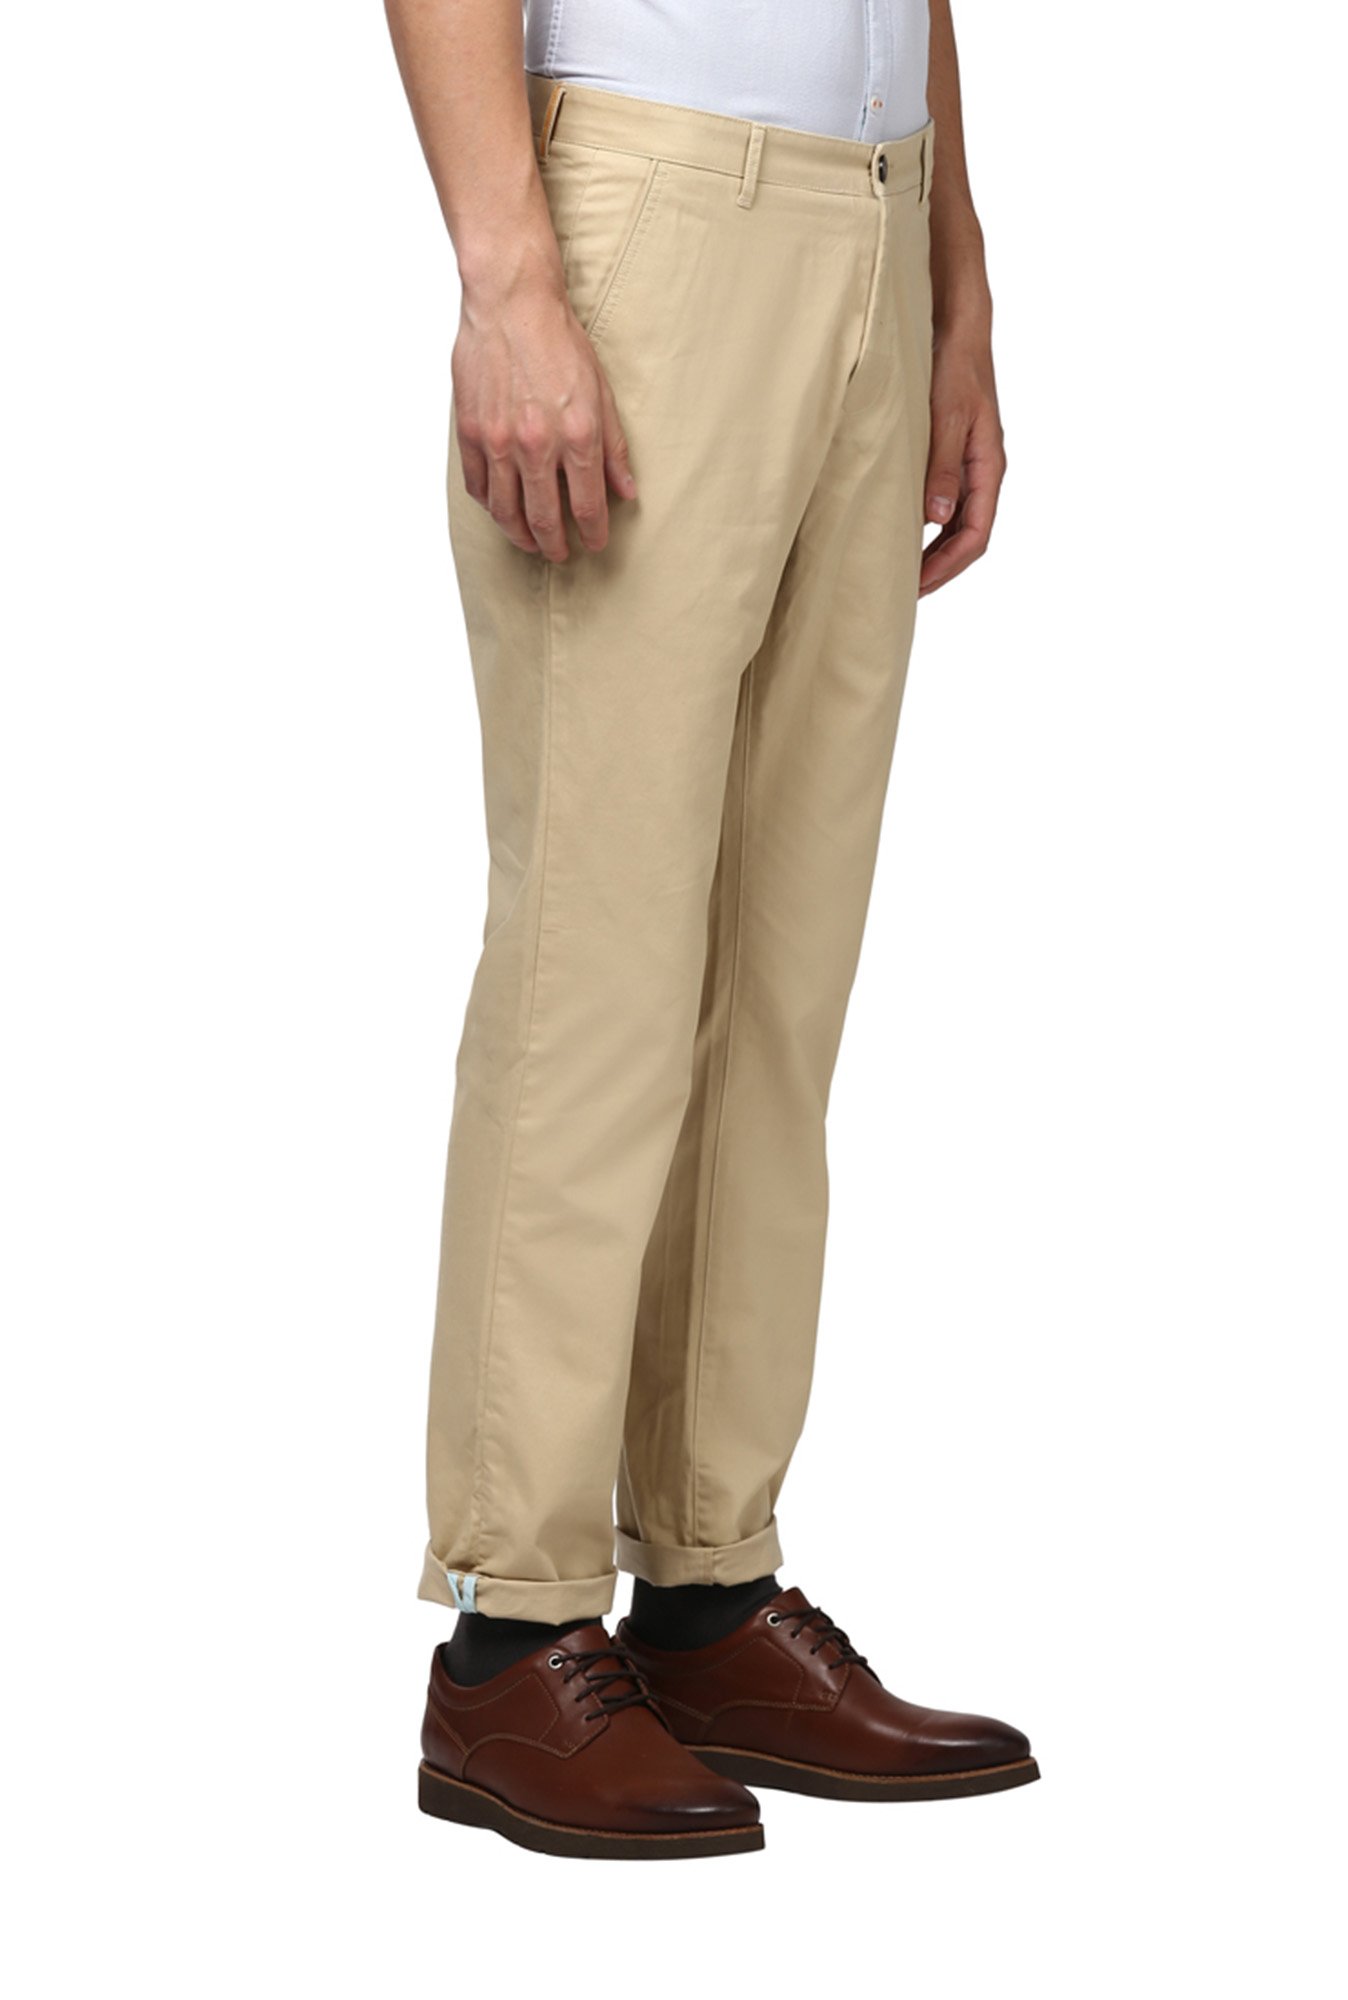 Buy ColorPlus Trousers online  Men  220 products  FASHIOLAin